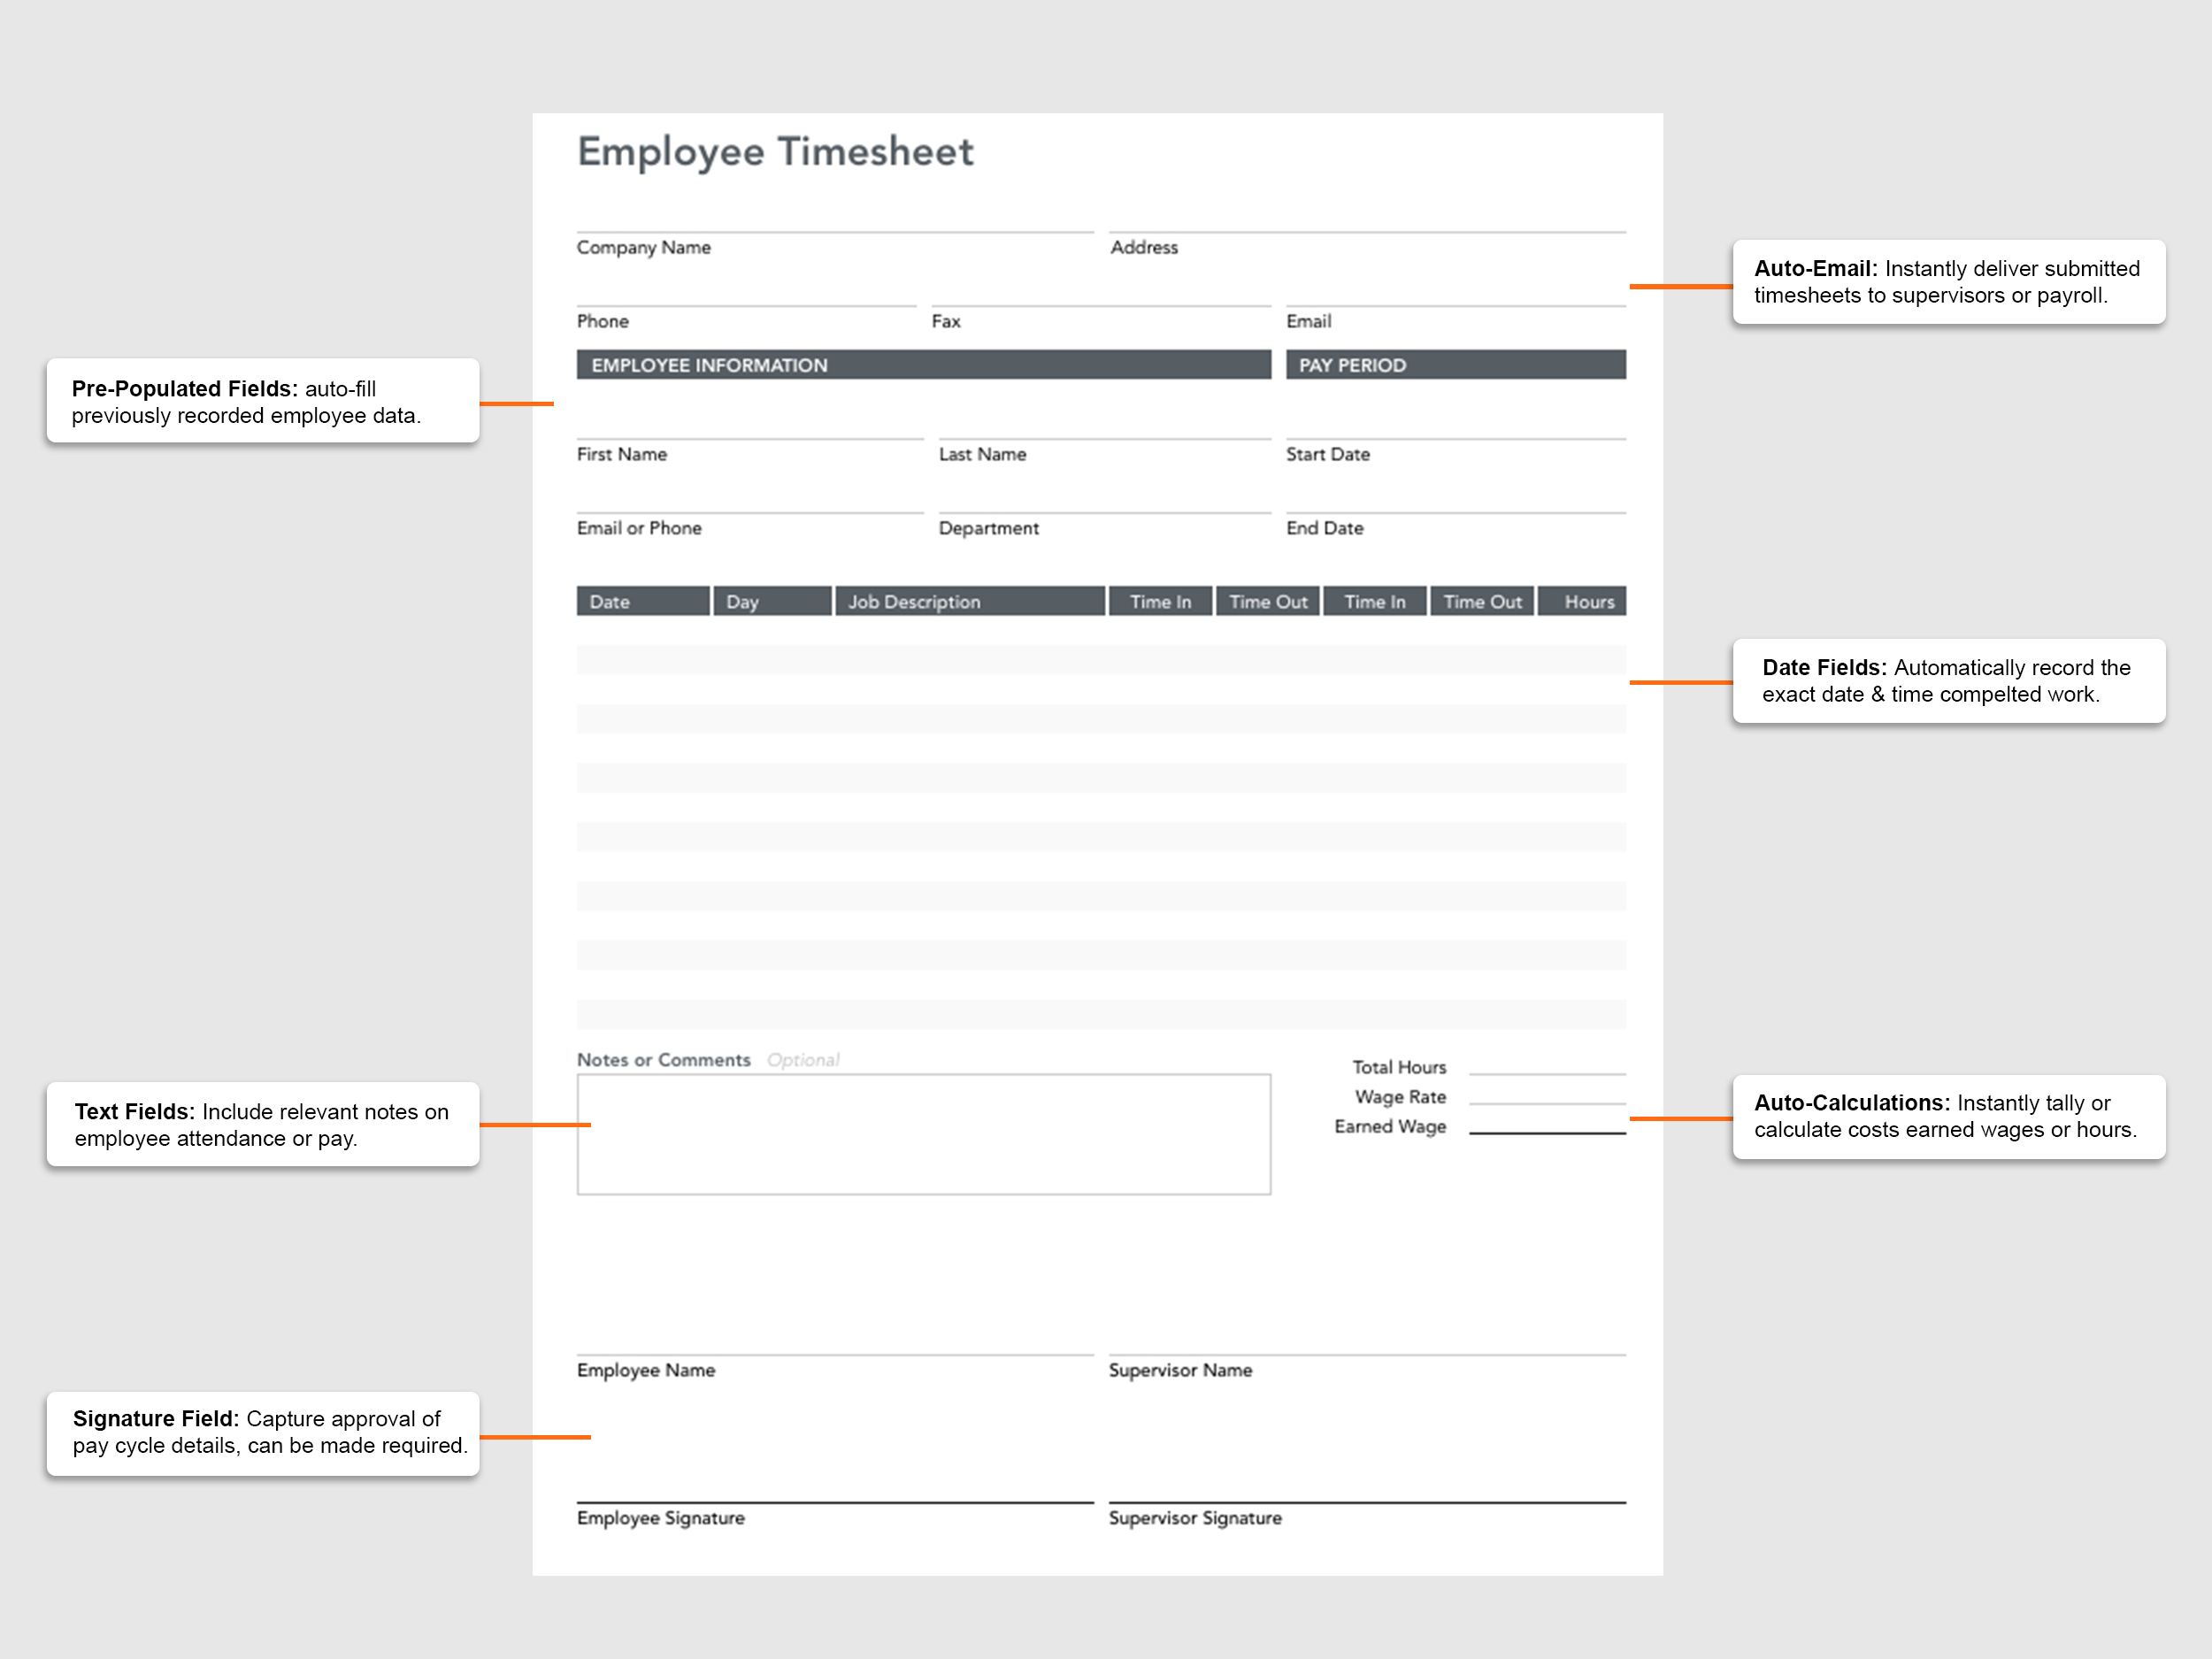 Spotlight Form: The Employee Timesheet - GoFormz